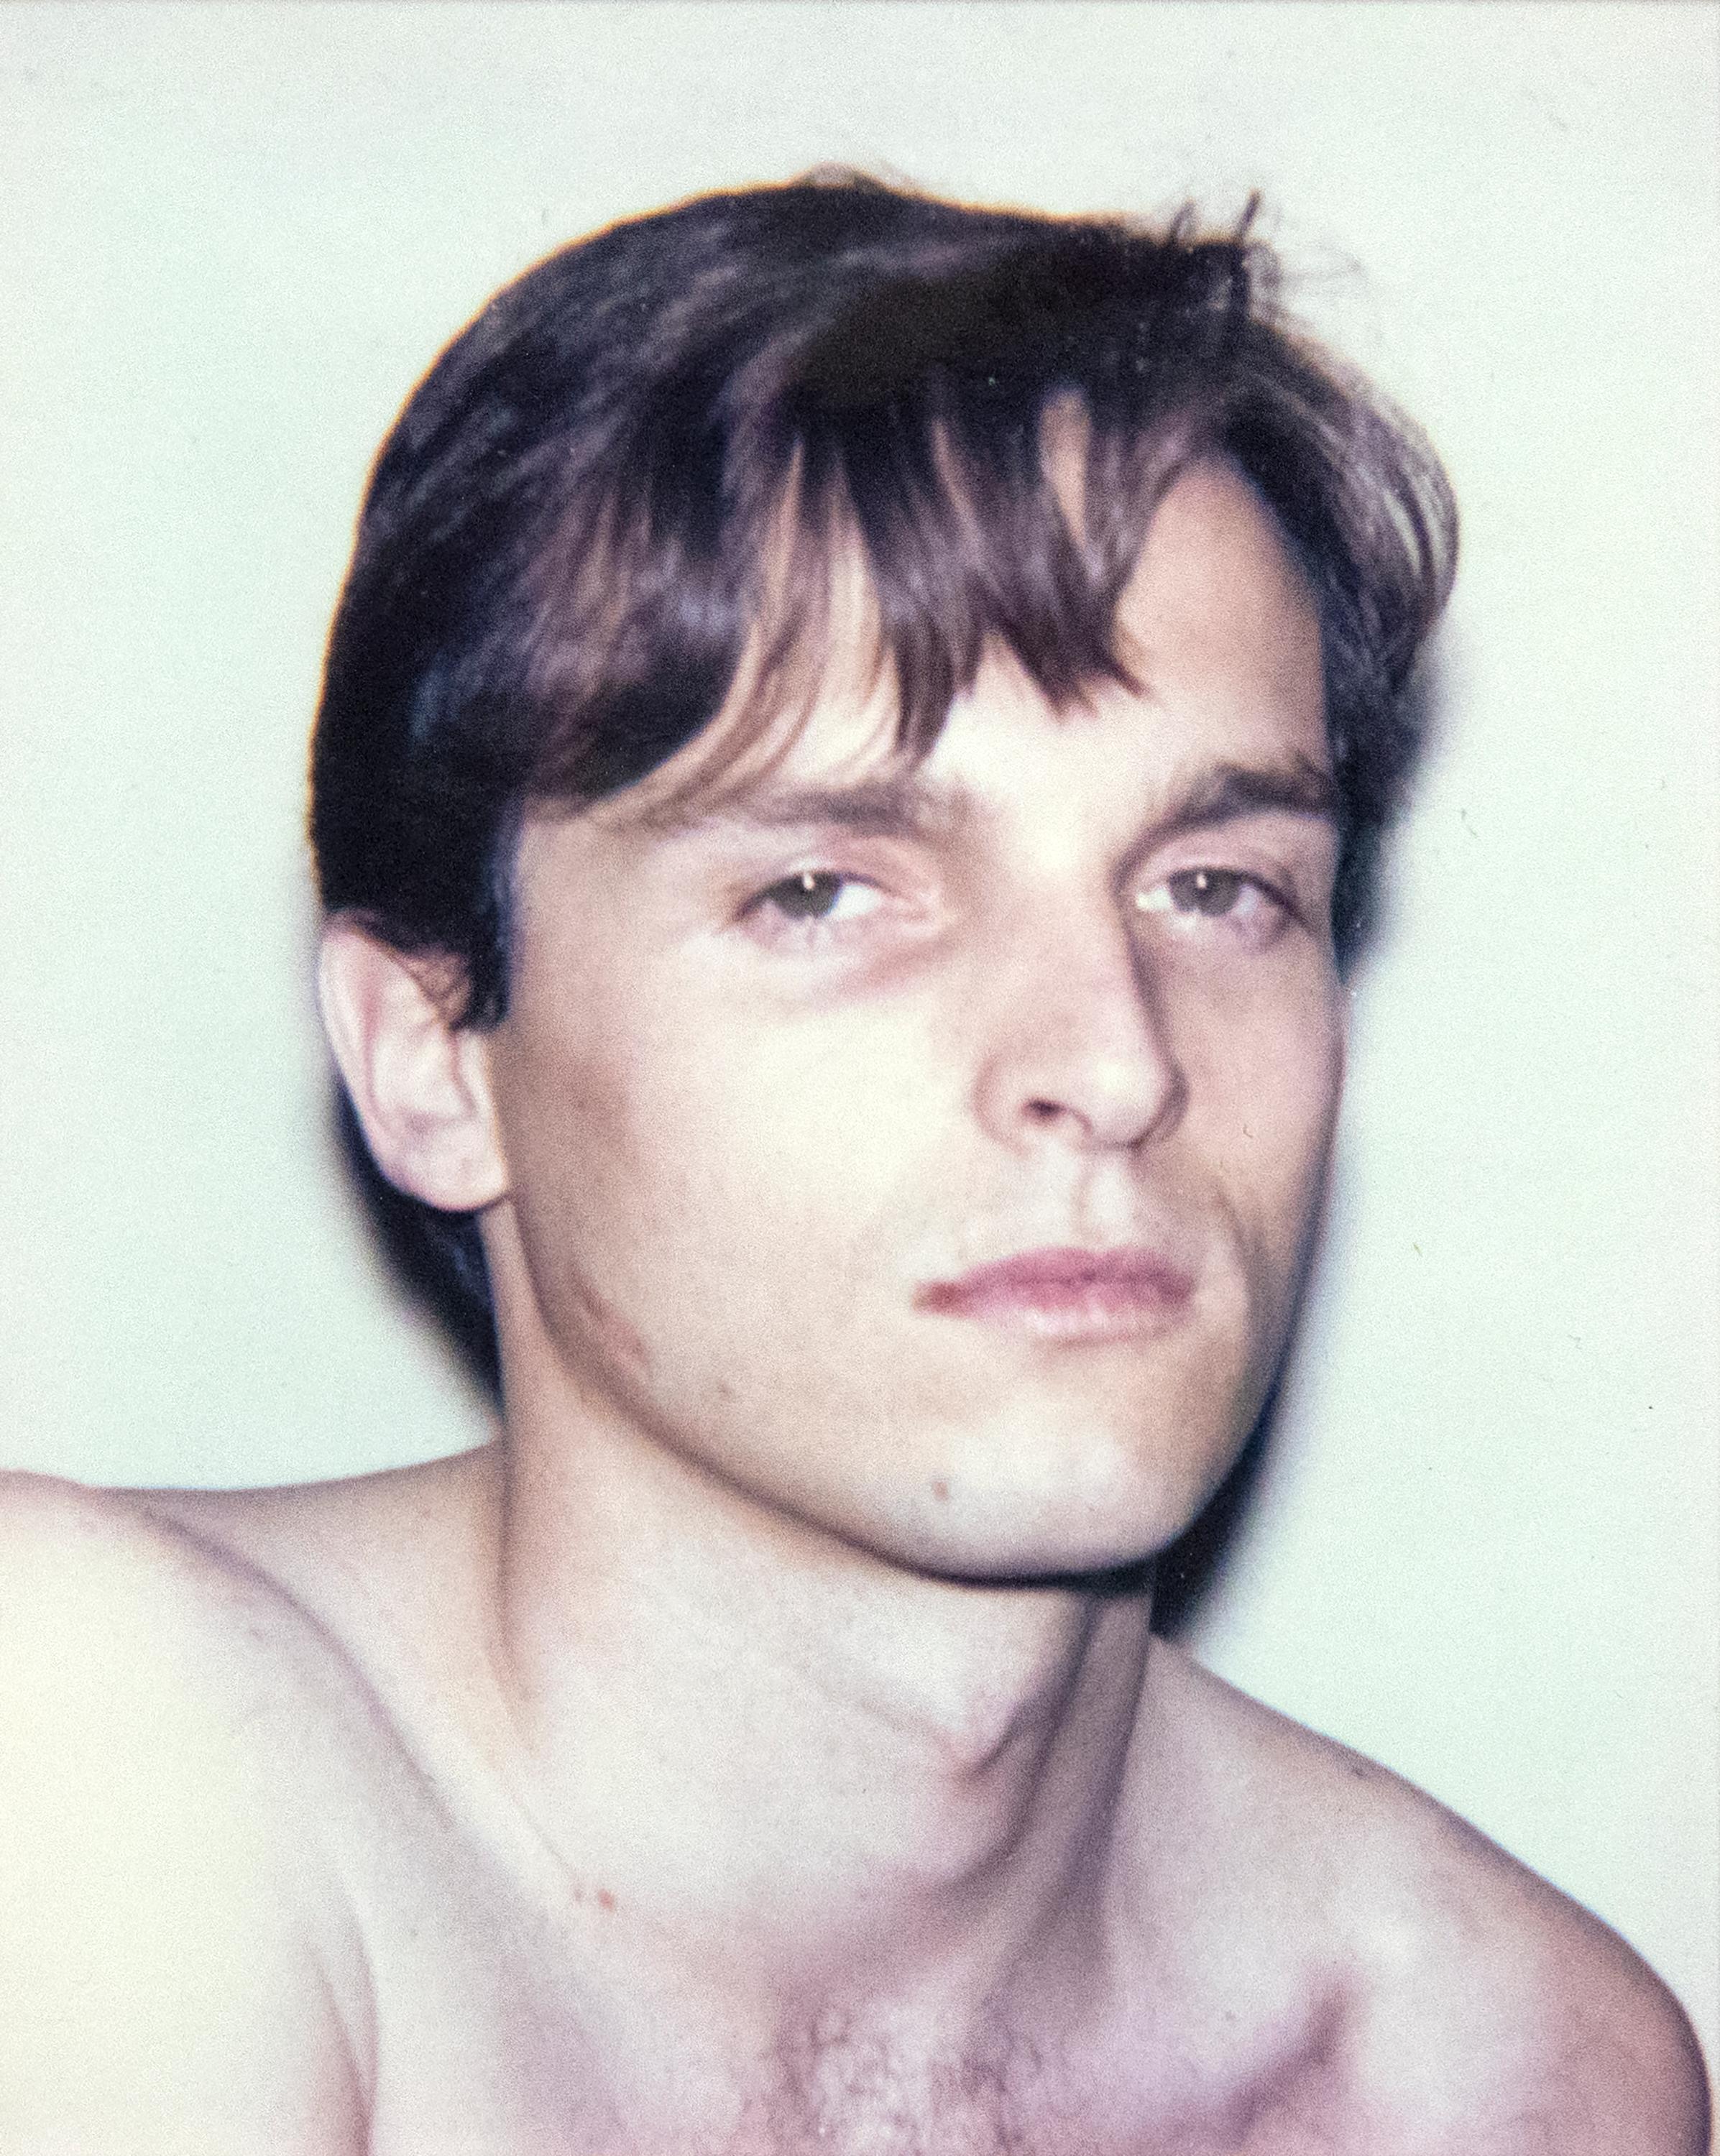 Andy Warhol Portrait Photograph - Miguel Bose